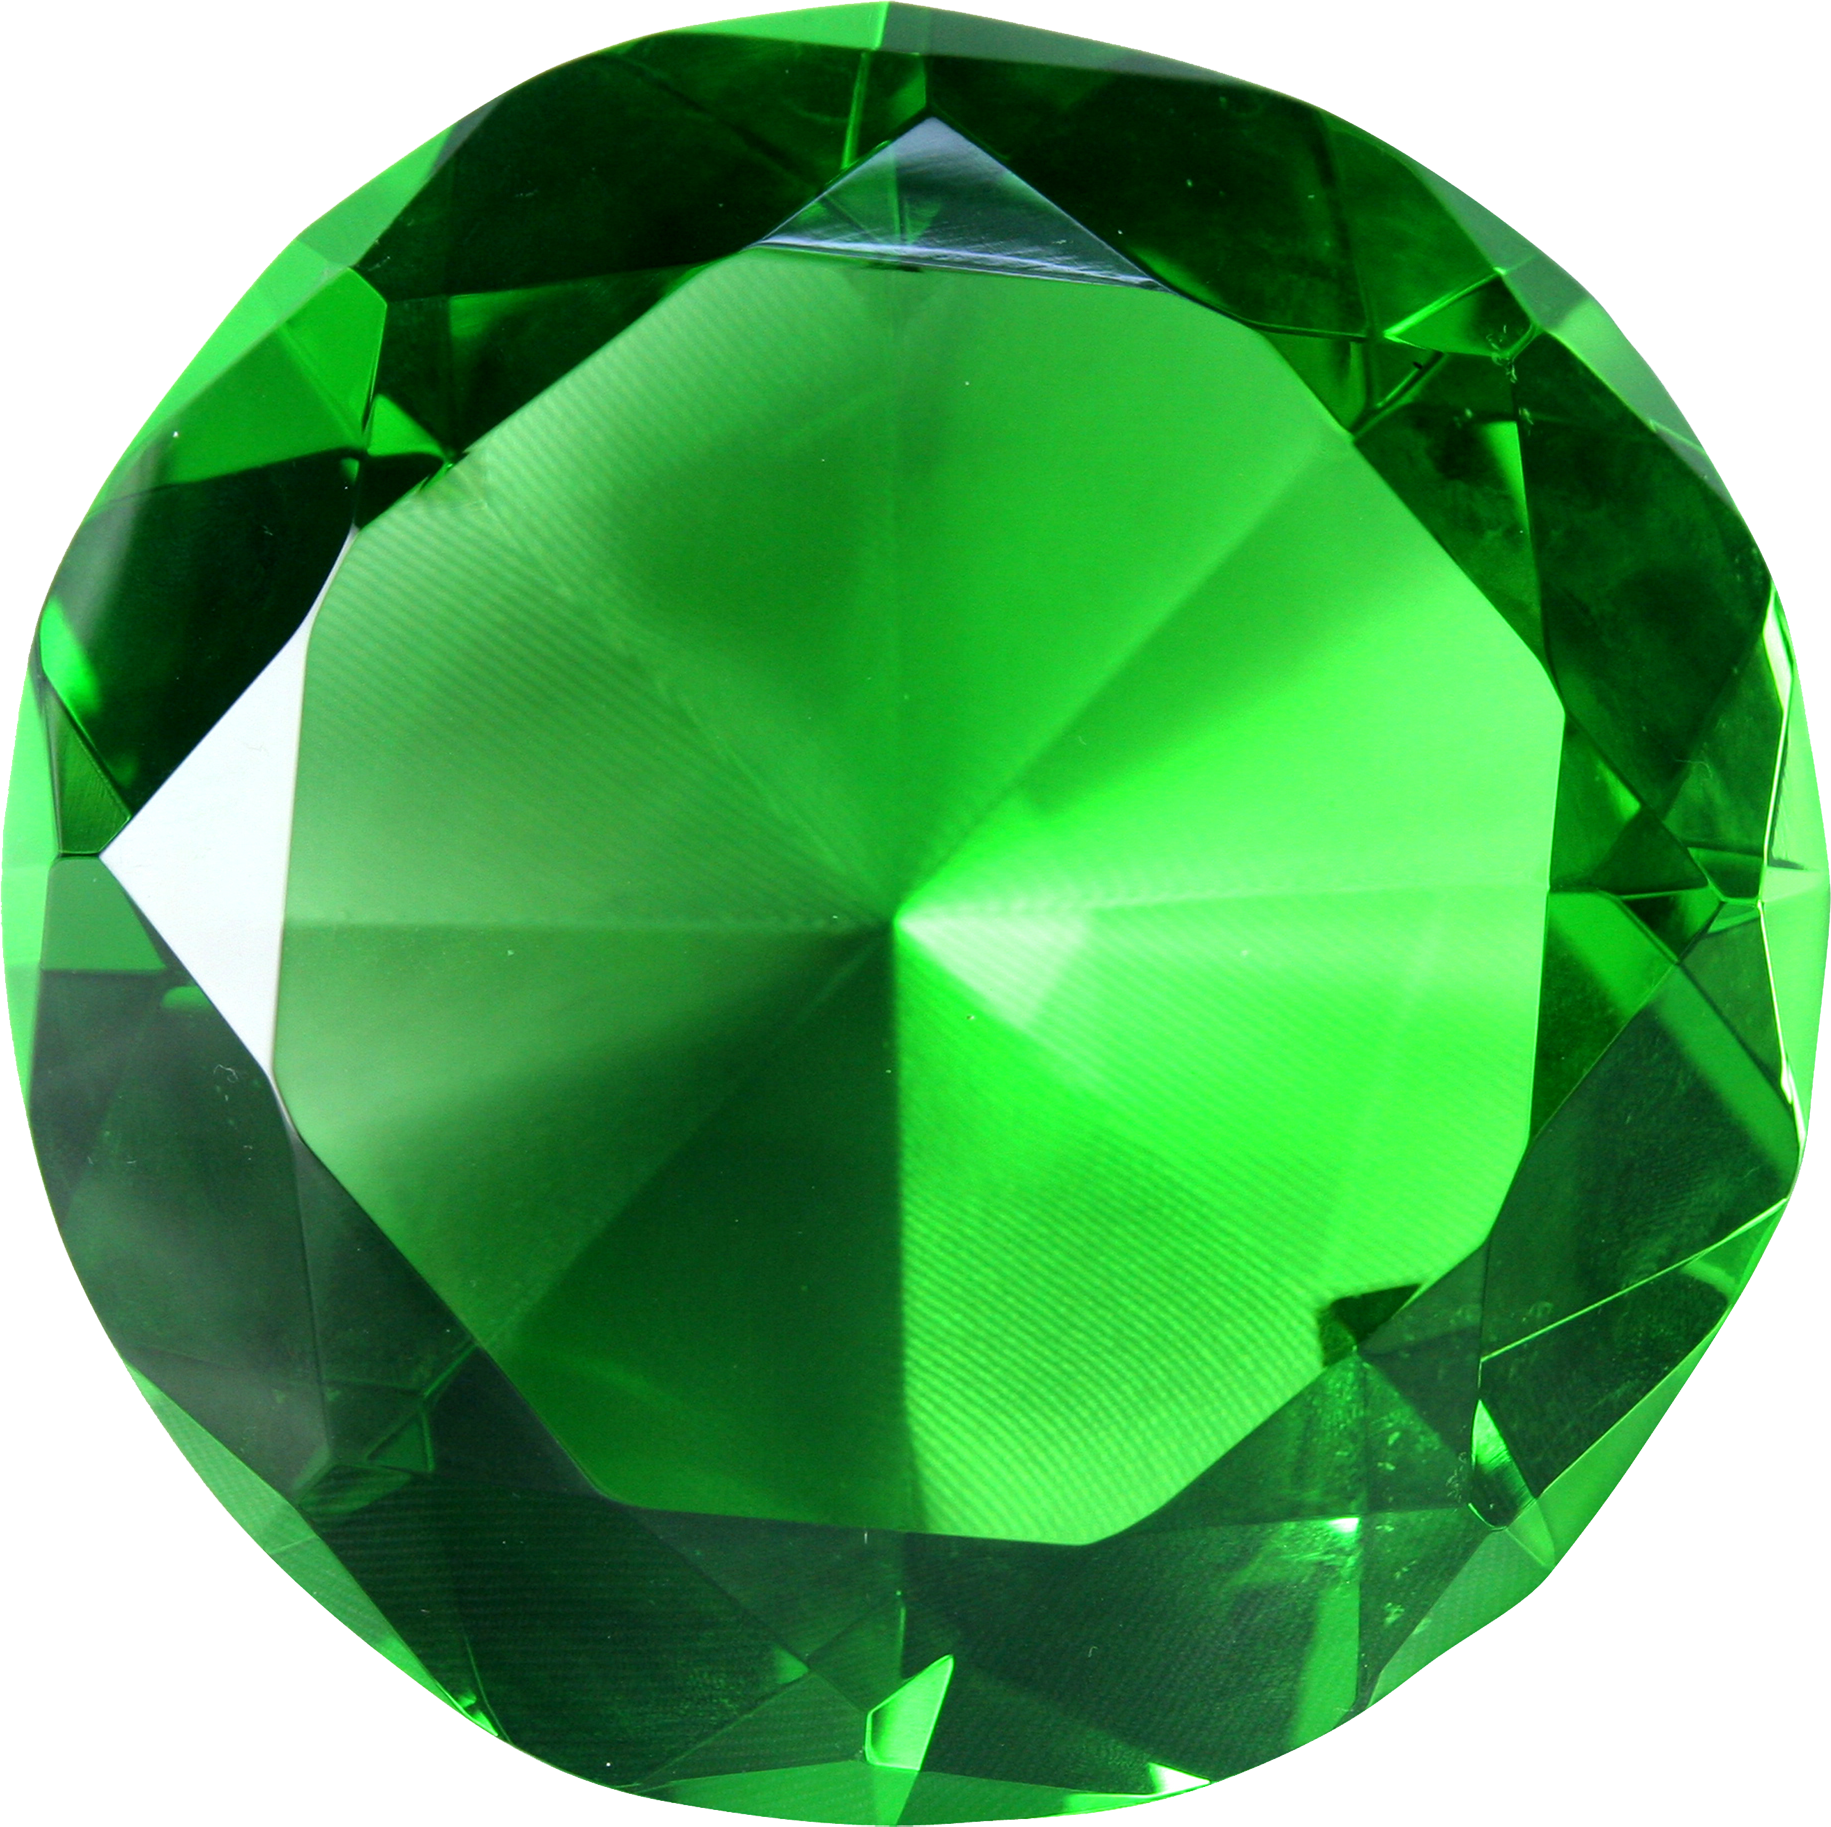 jewel clipart emerald stone